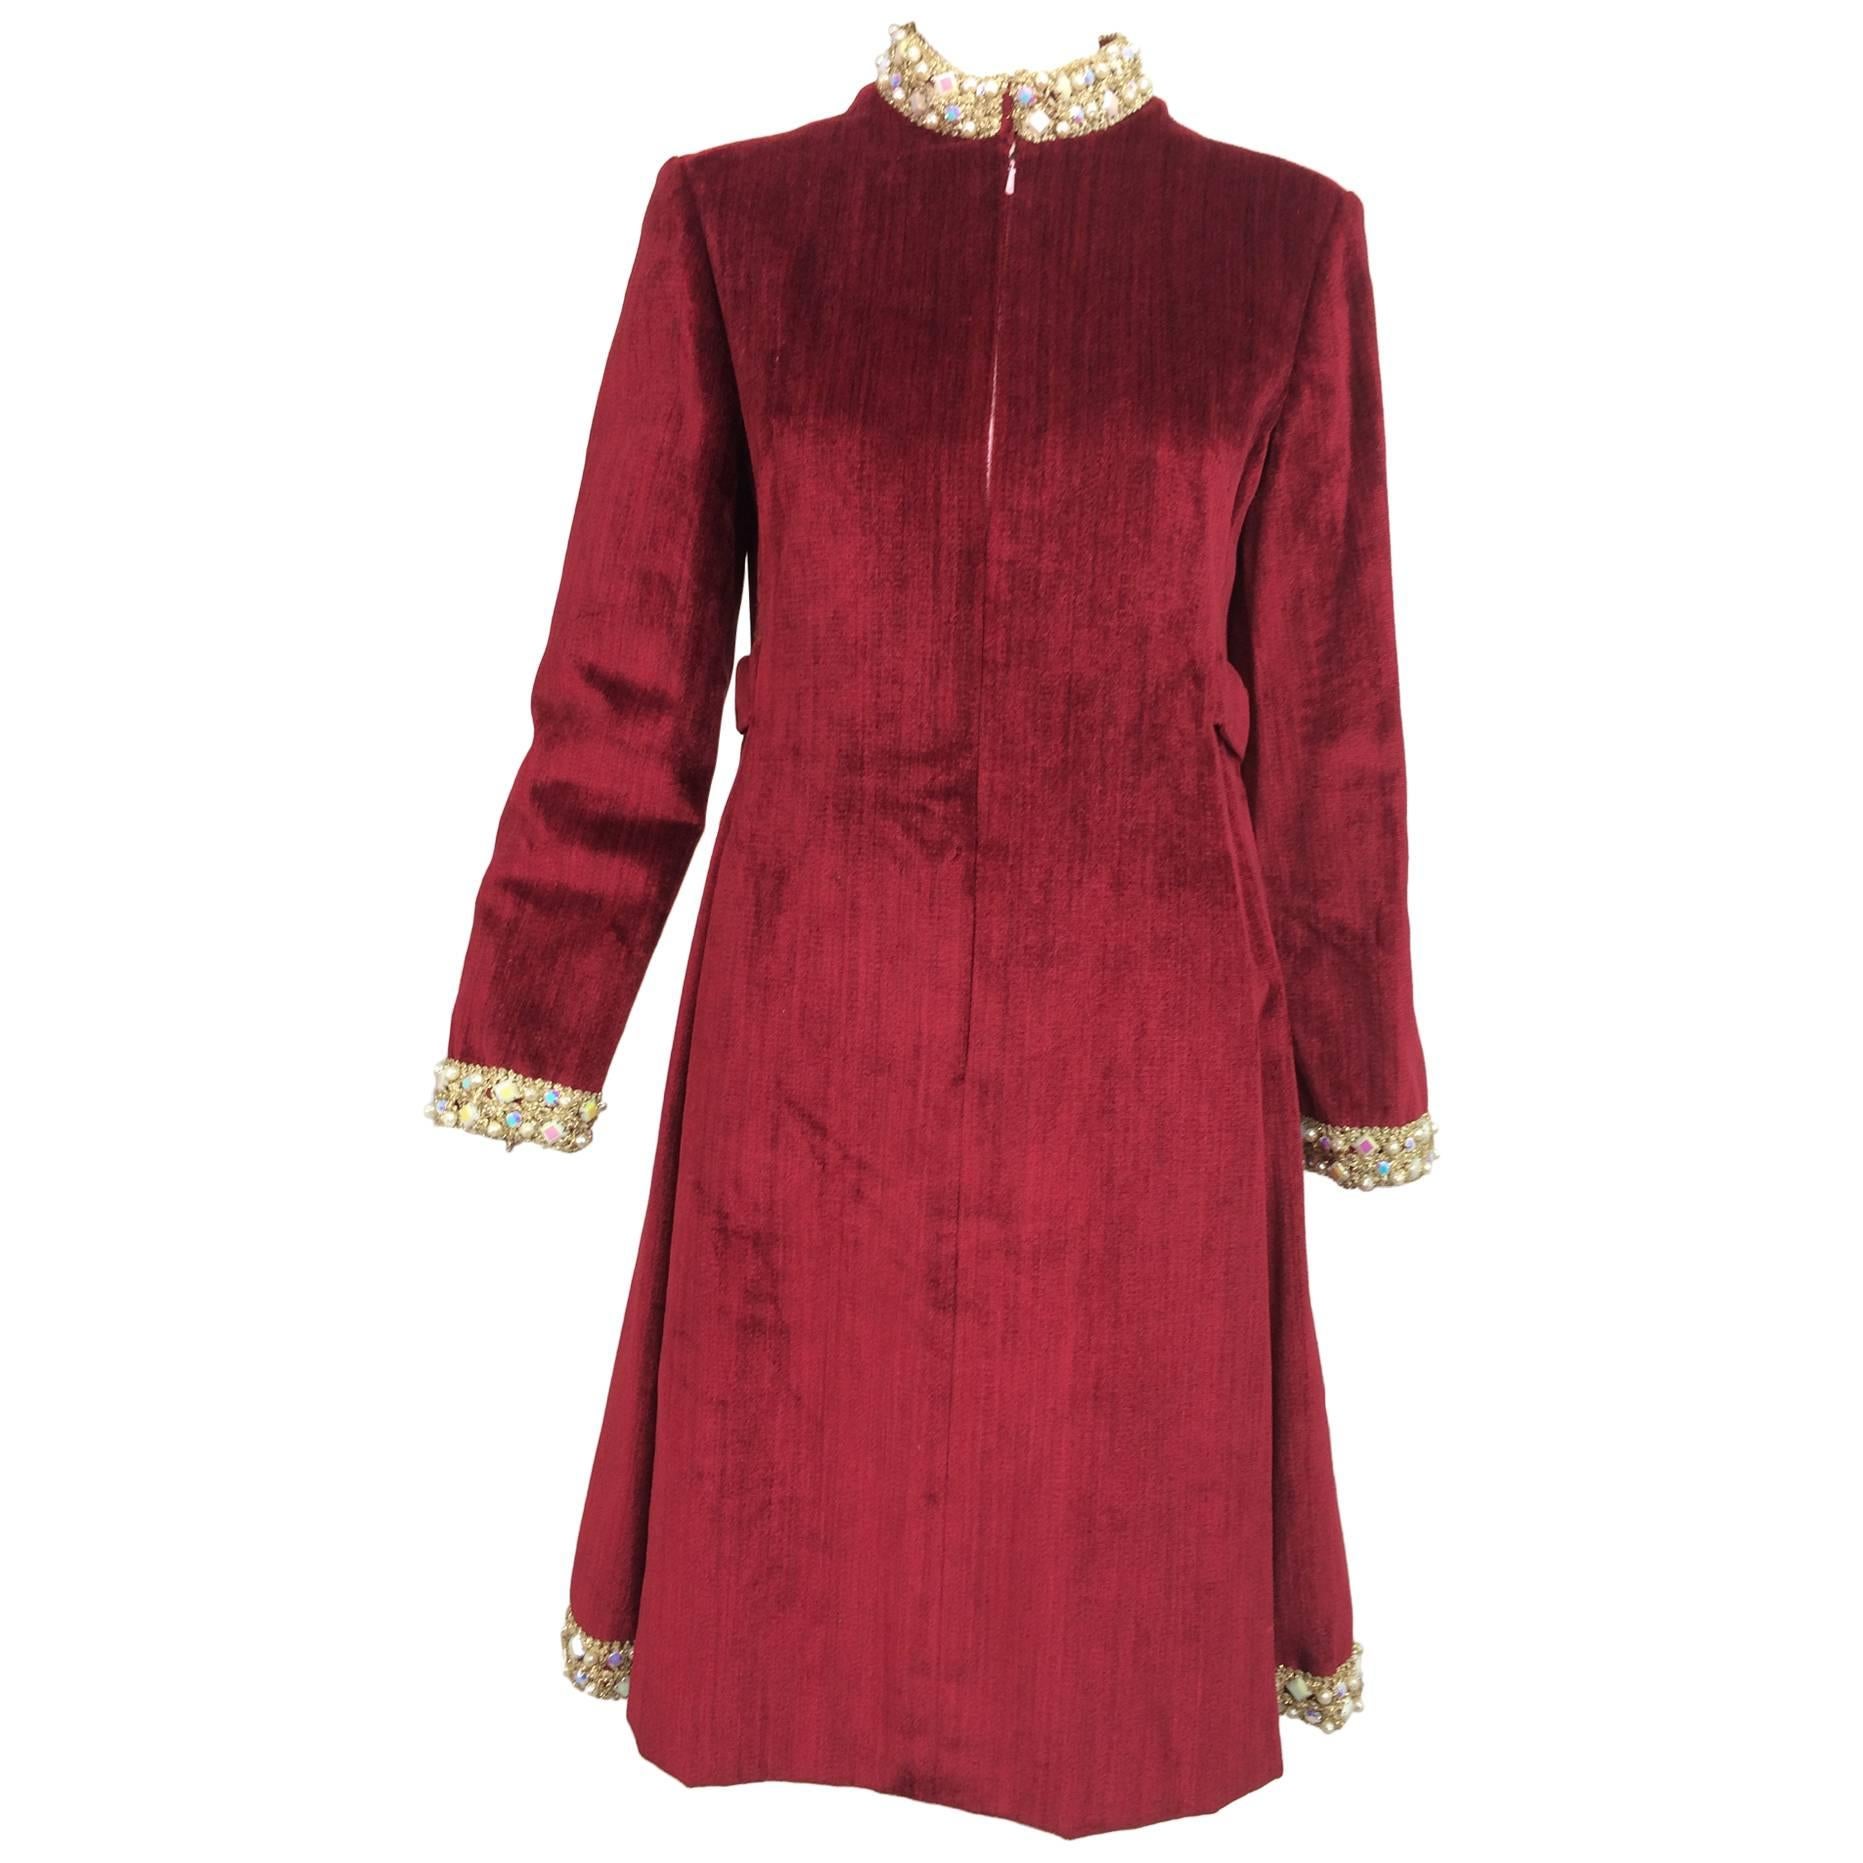 Garnet red silky cotton velvet jewel trim Mod dress 1960s